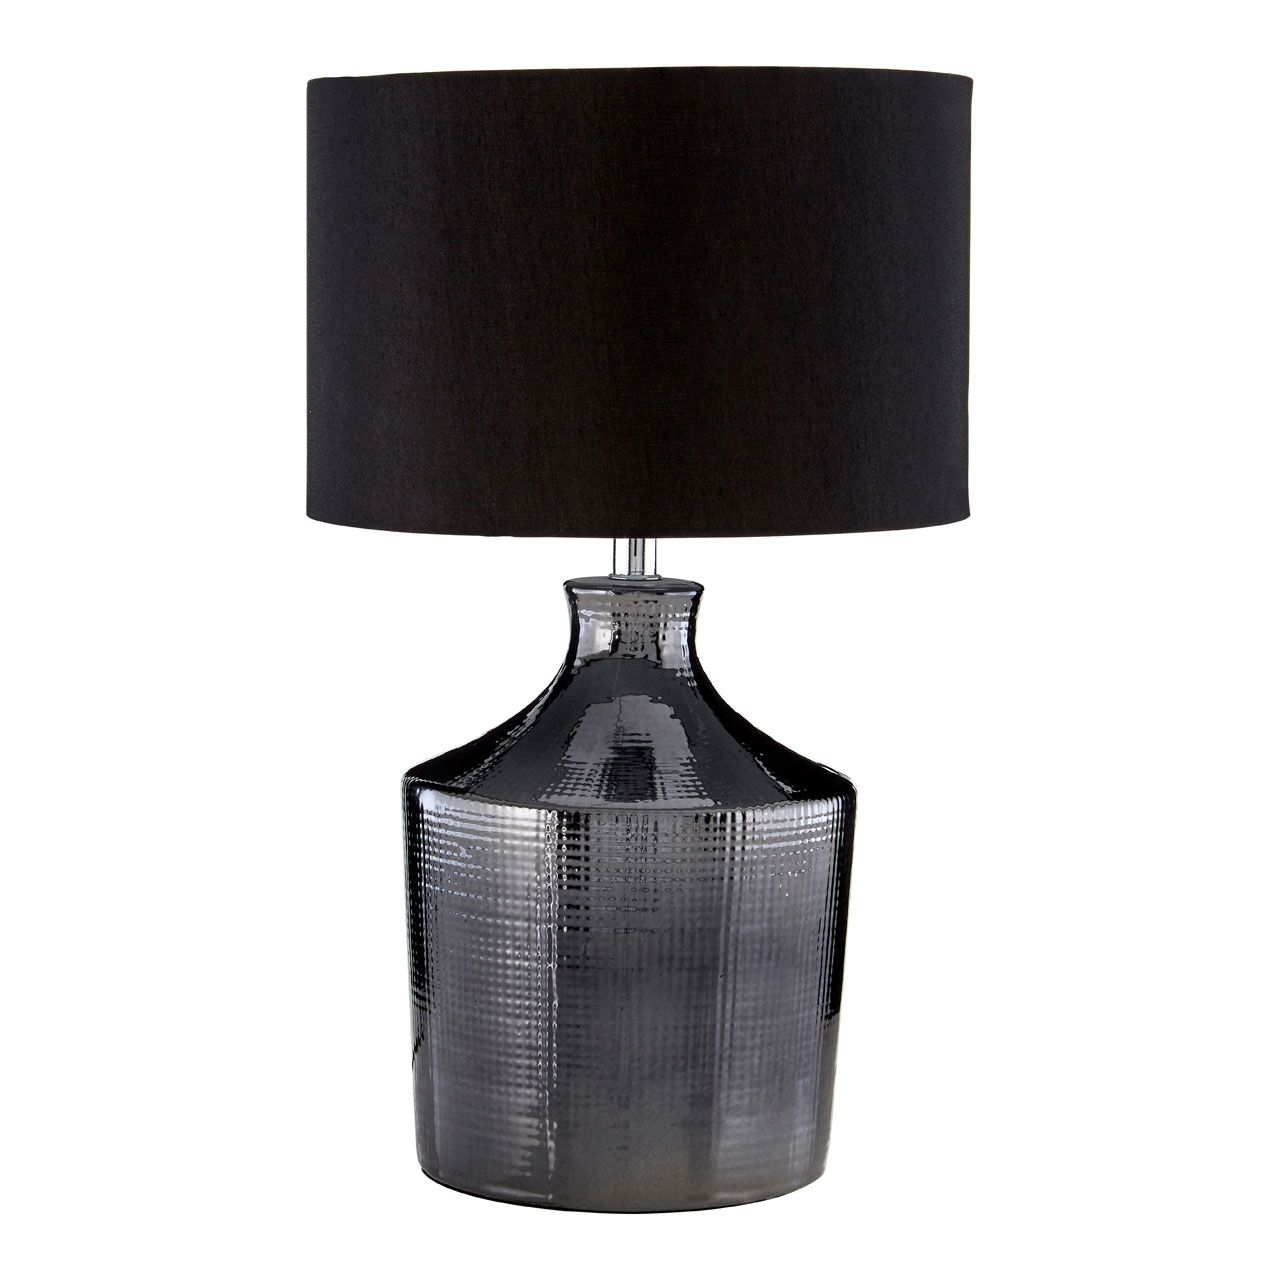 Jeff Black Fabric Shade Table Lamp With Black Ceramic Base